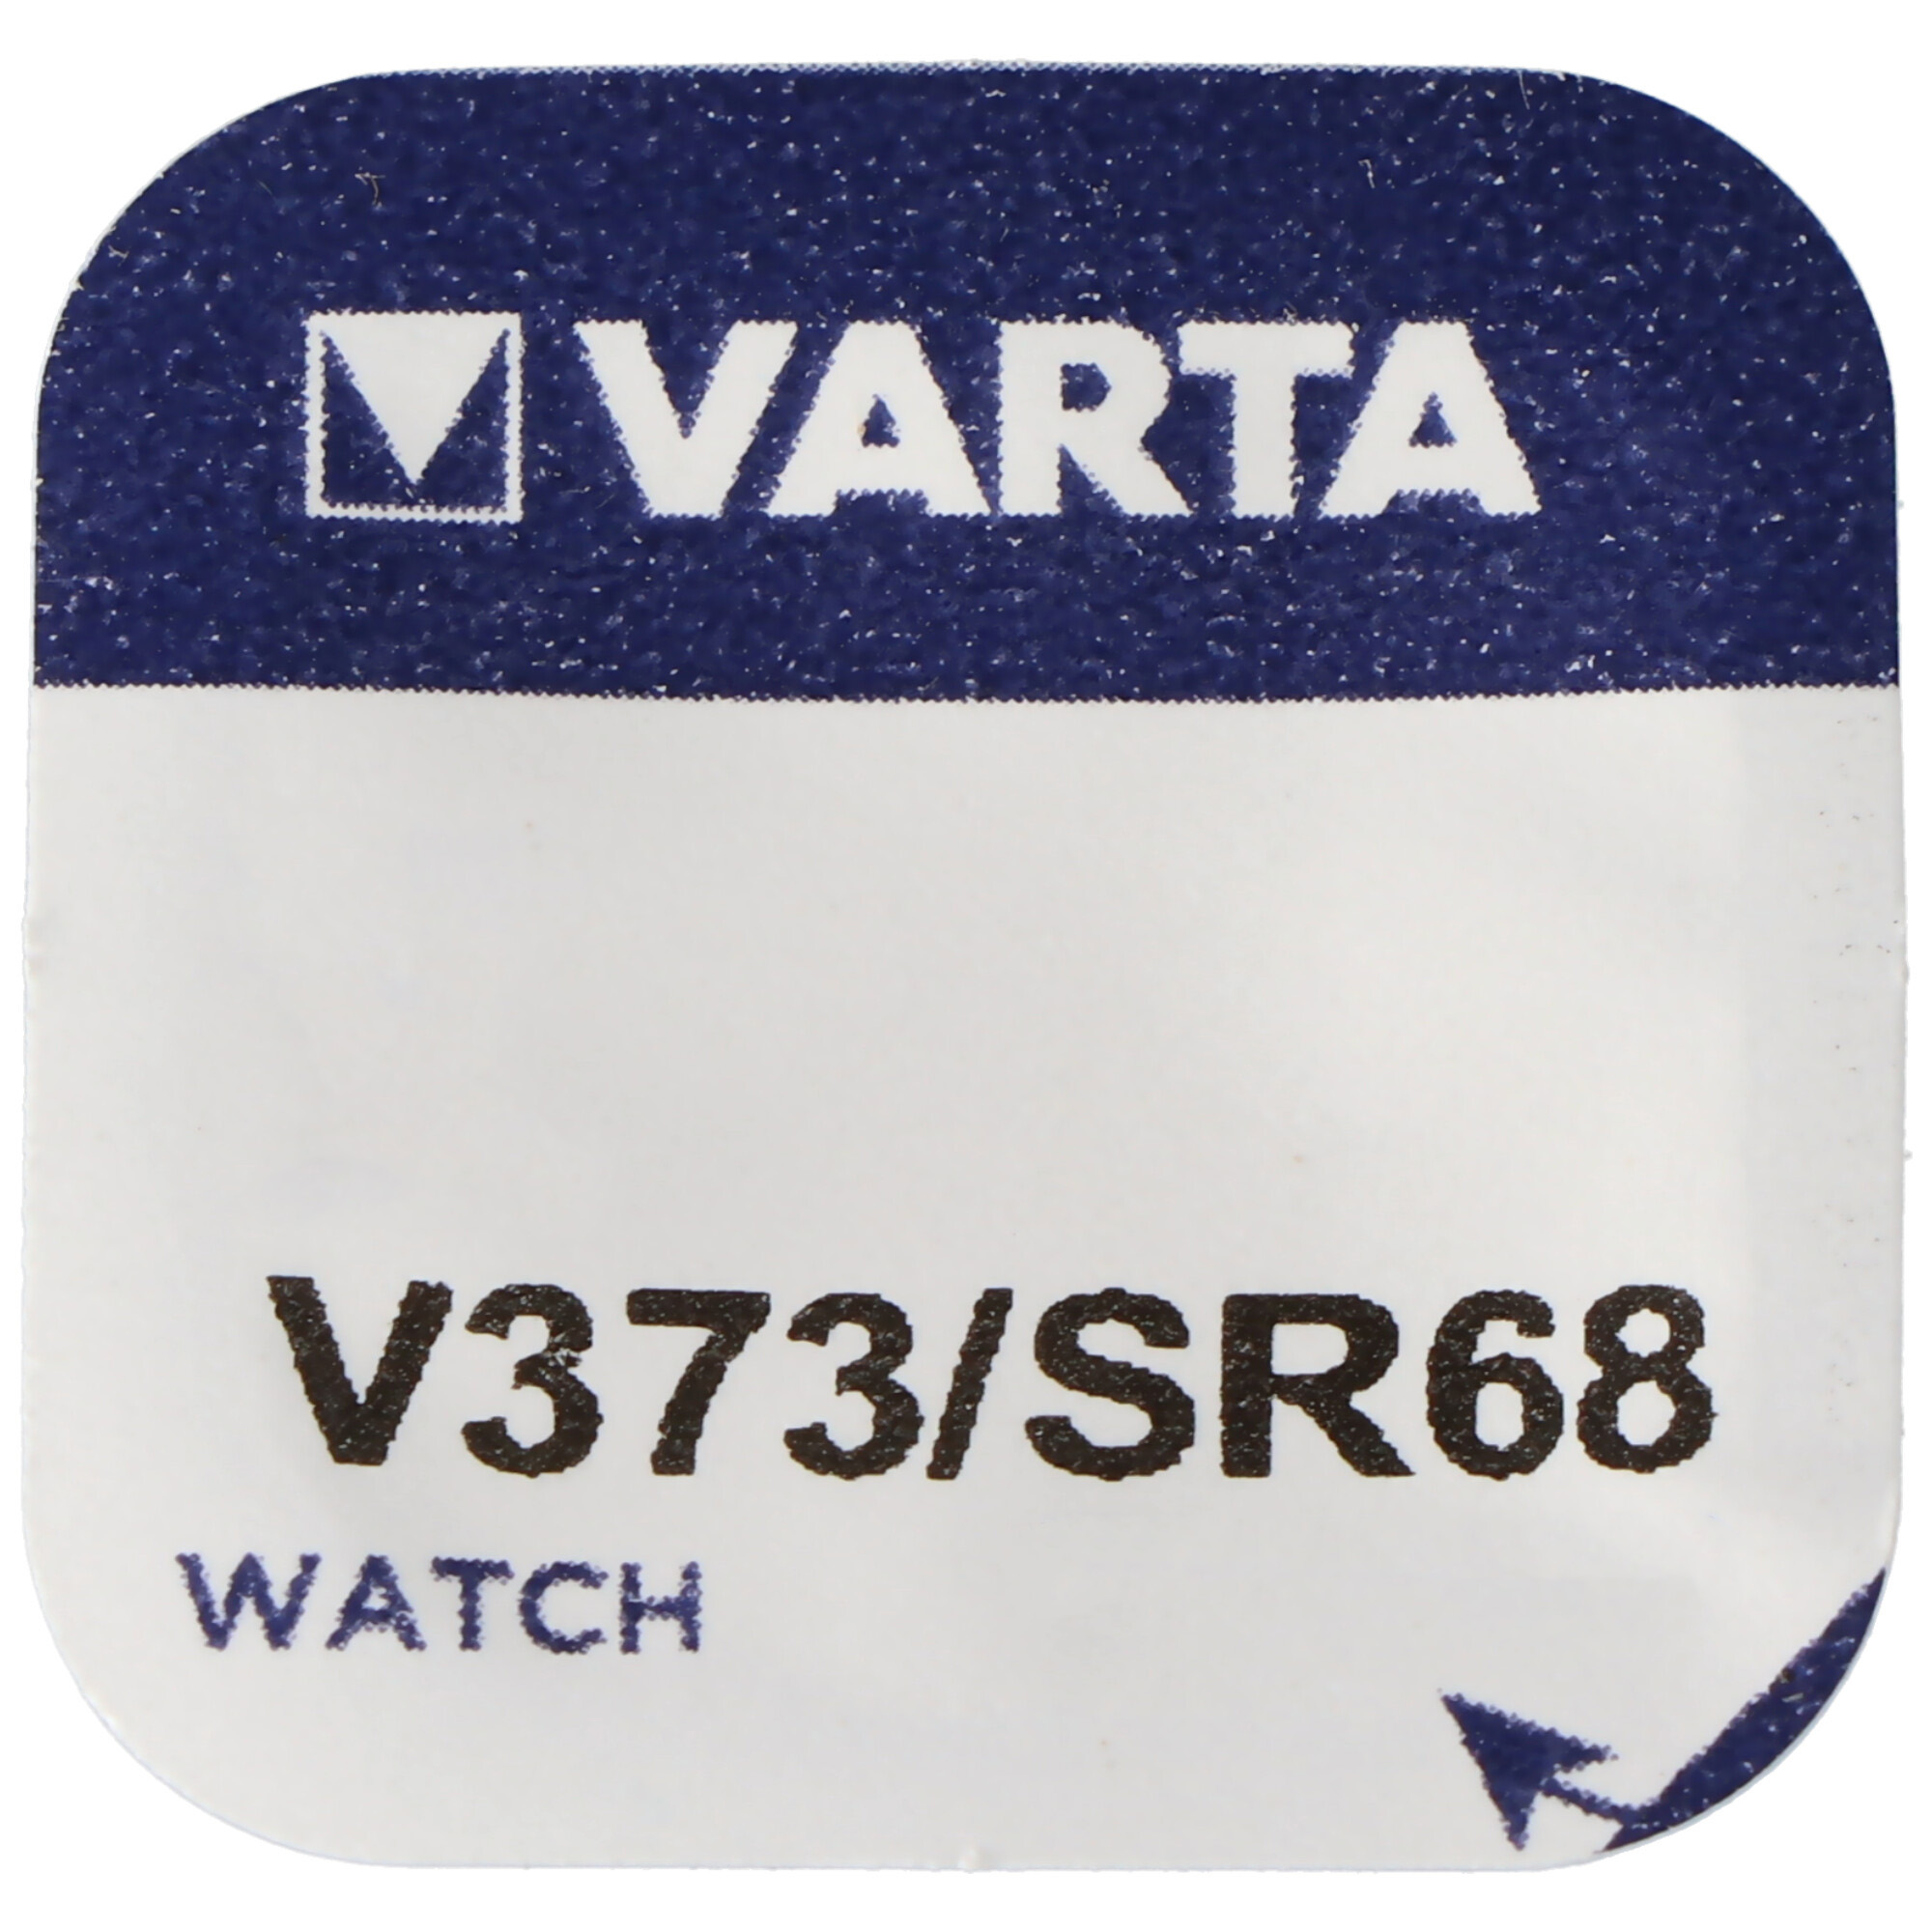 373, Varta V373, SR68, SR916SW Knopfzelle für Uhren etc.